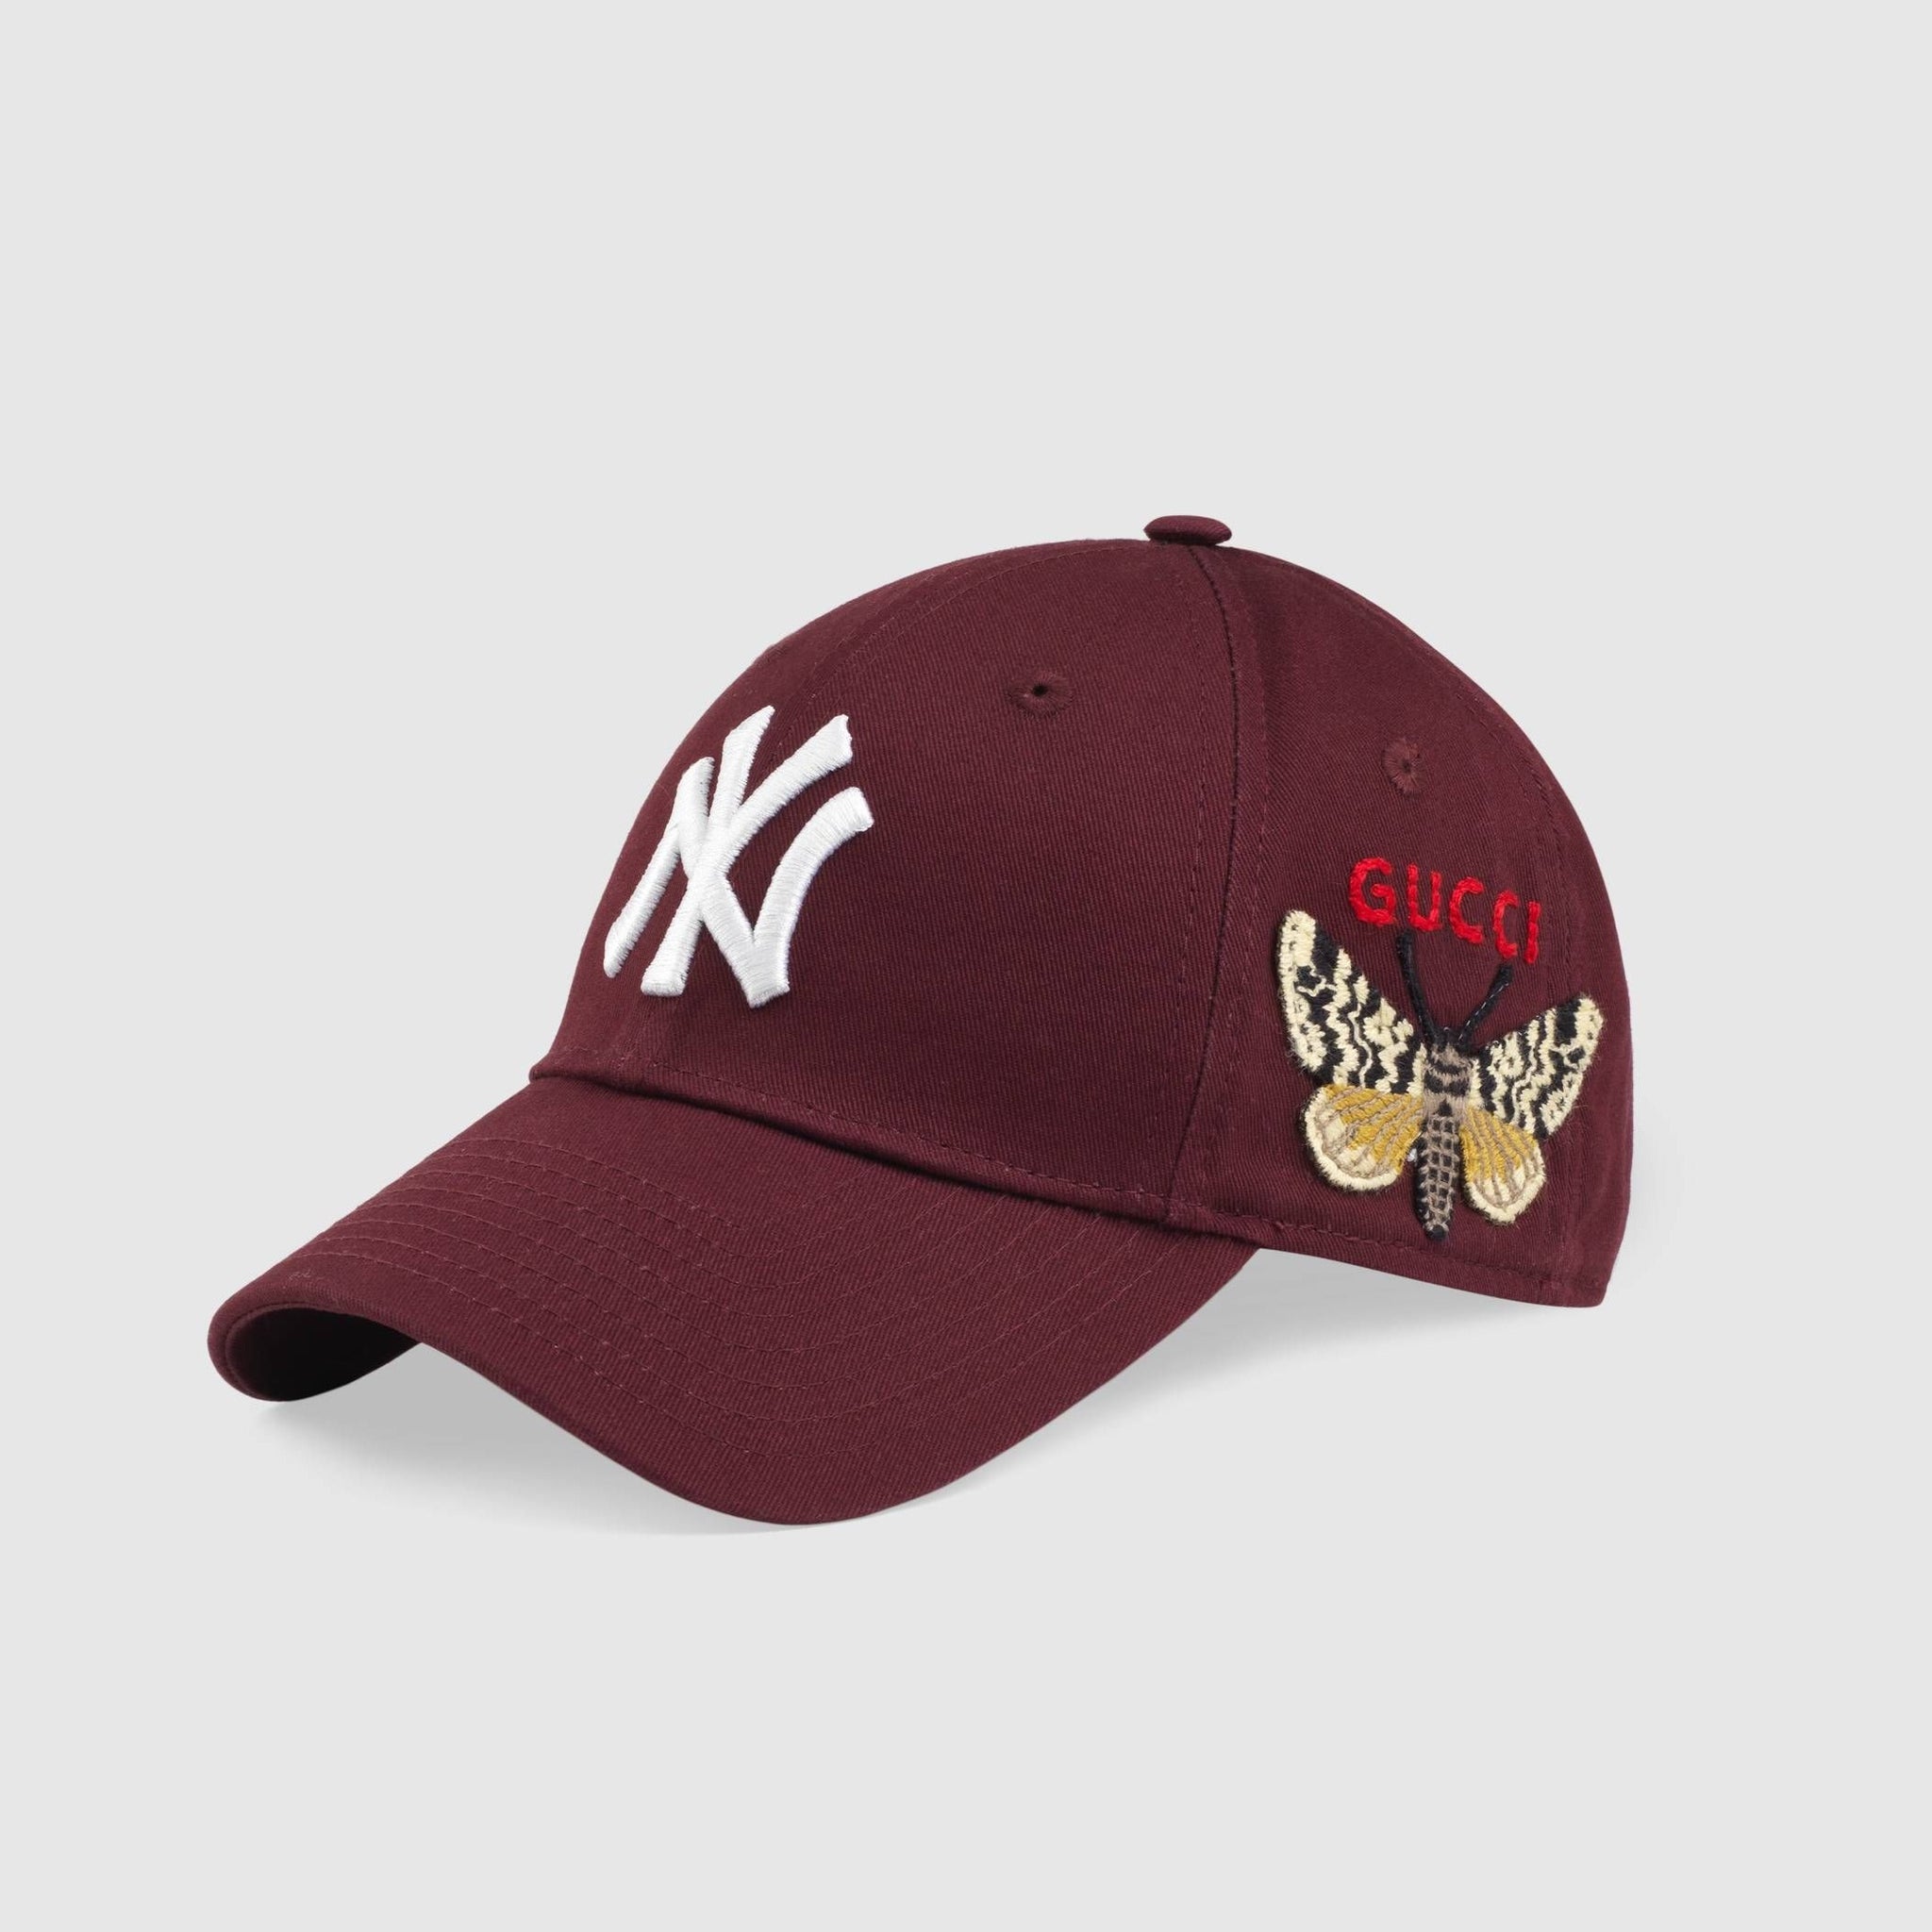 NY GG Brown Monogram Baseball Hat New York Yankee Adjustable Cap